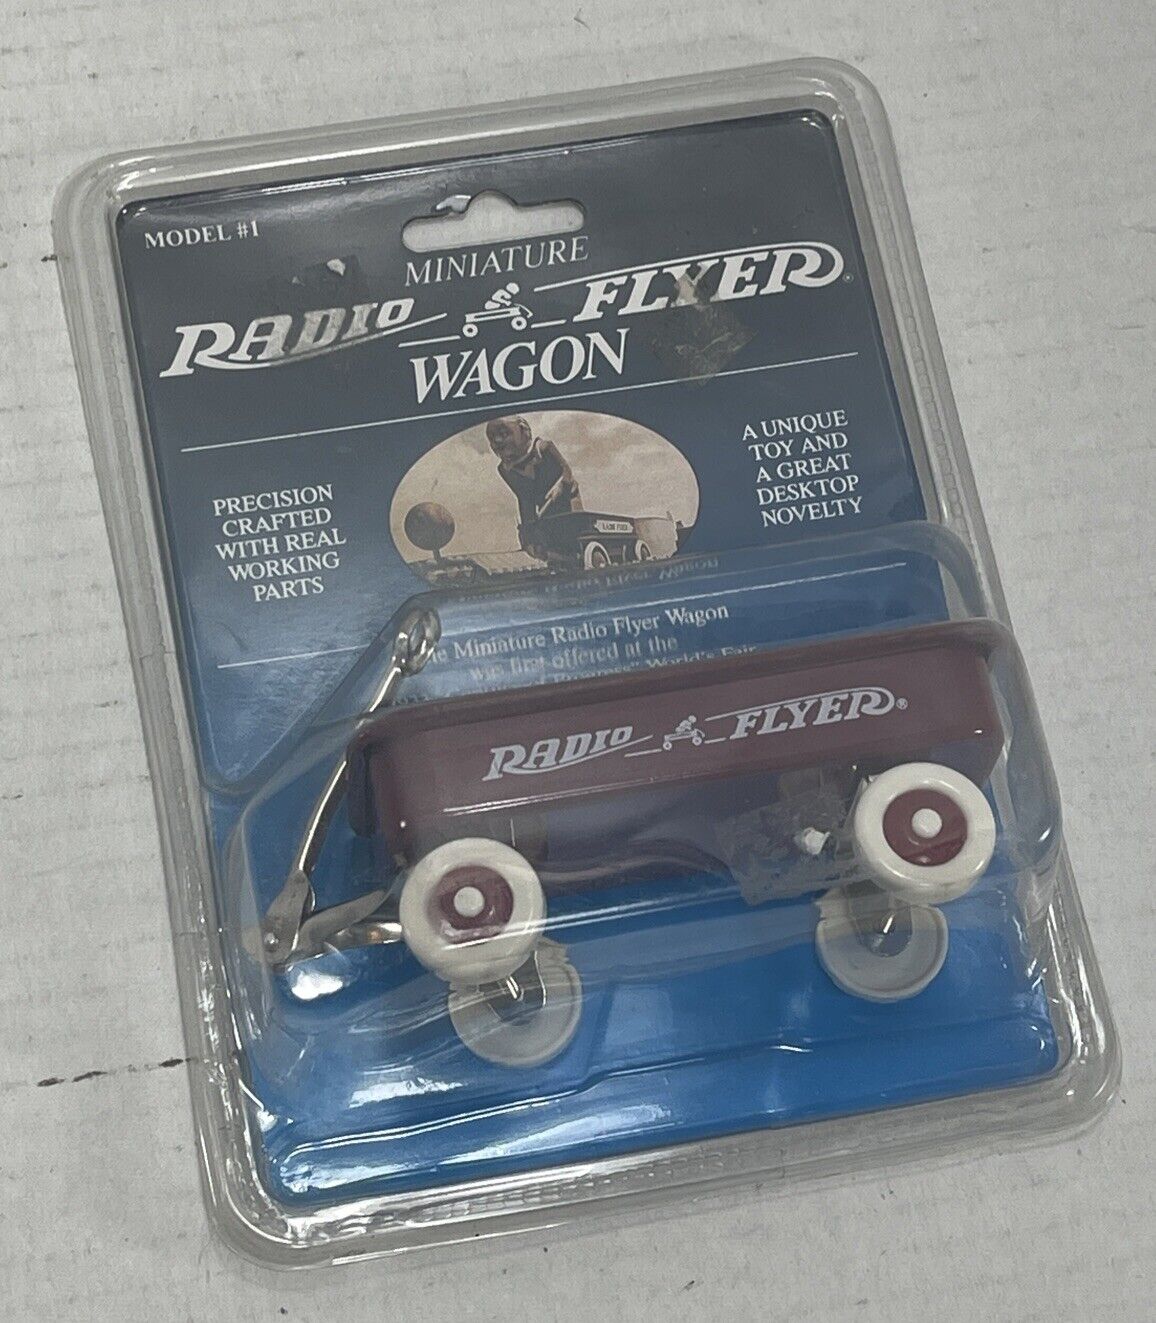 1990 Miniature Mini Radio Flyer Wagon Model #1 Sealed in Packaging BRAND NEW